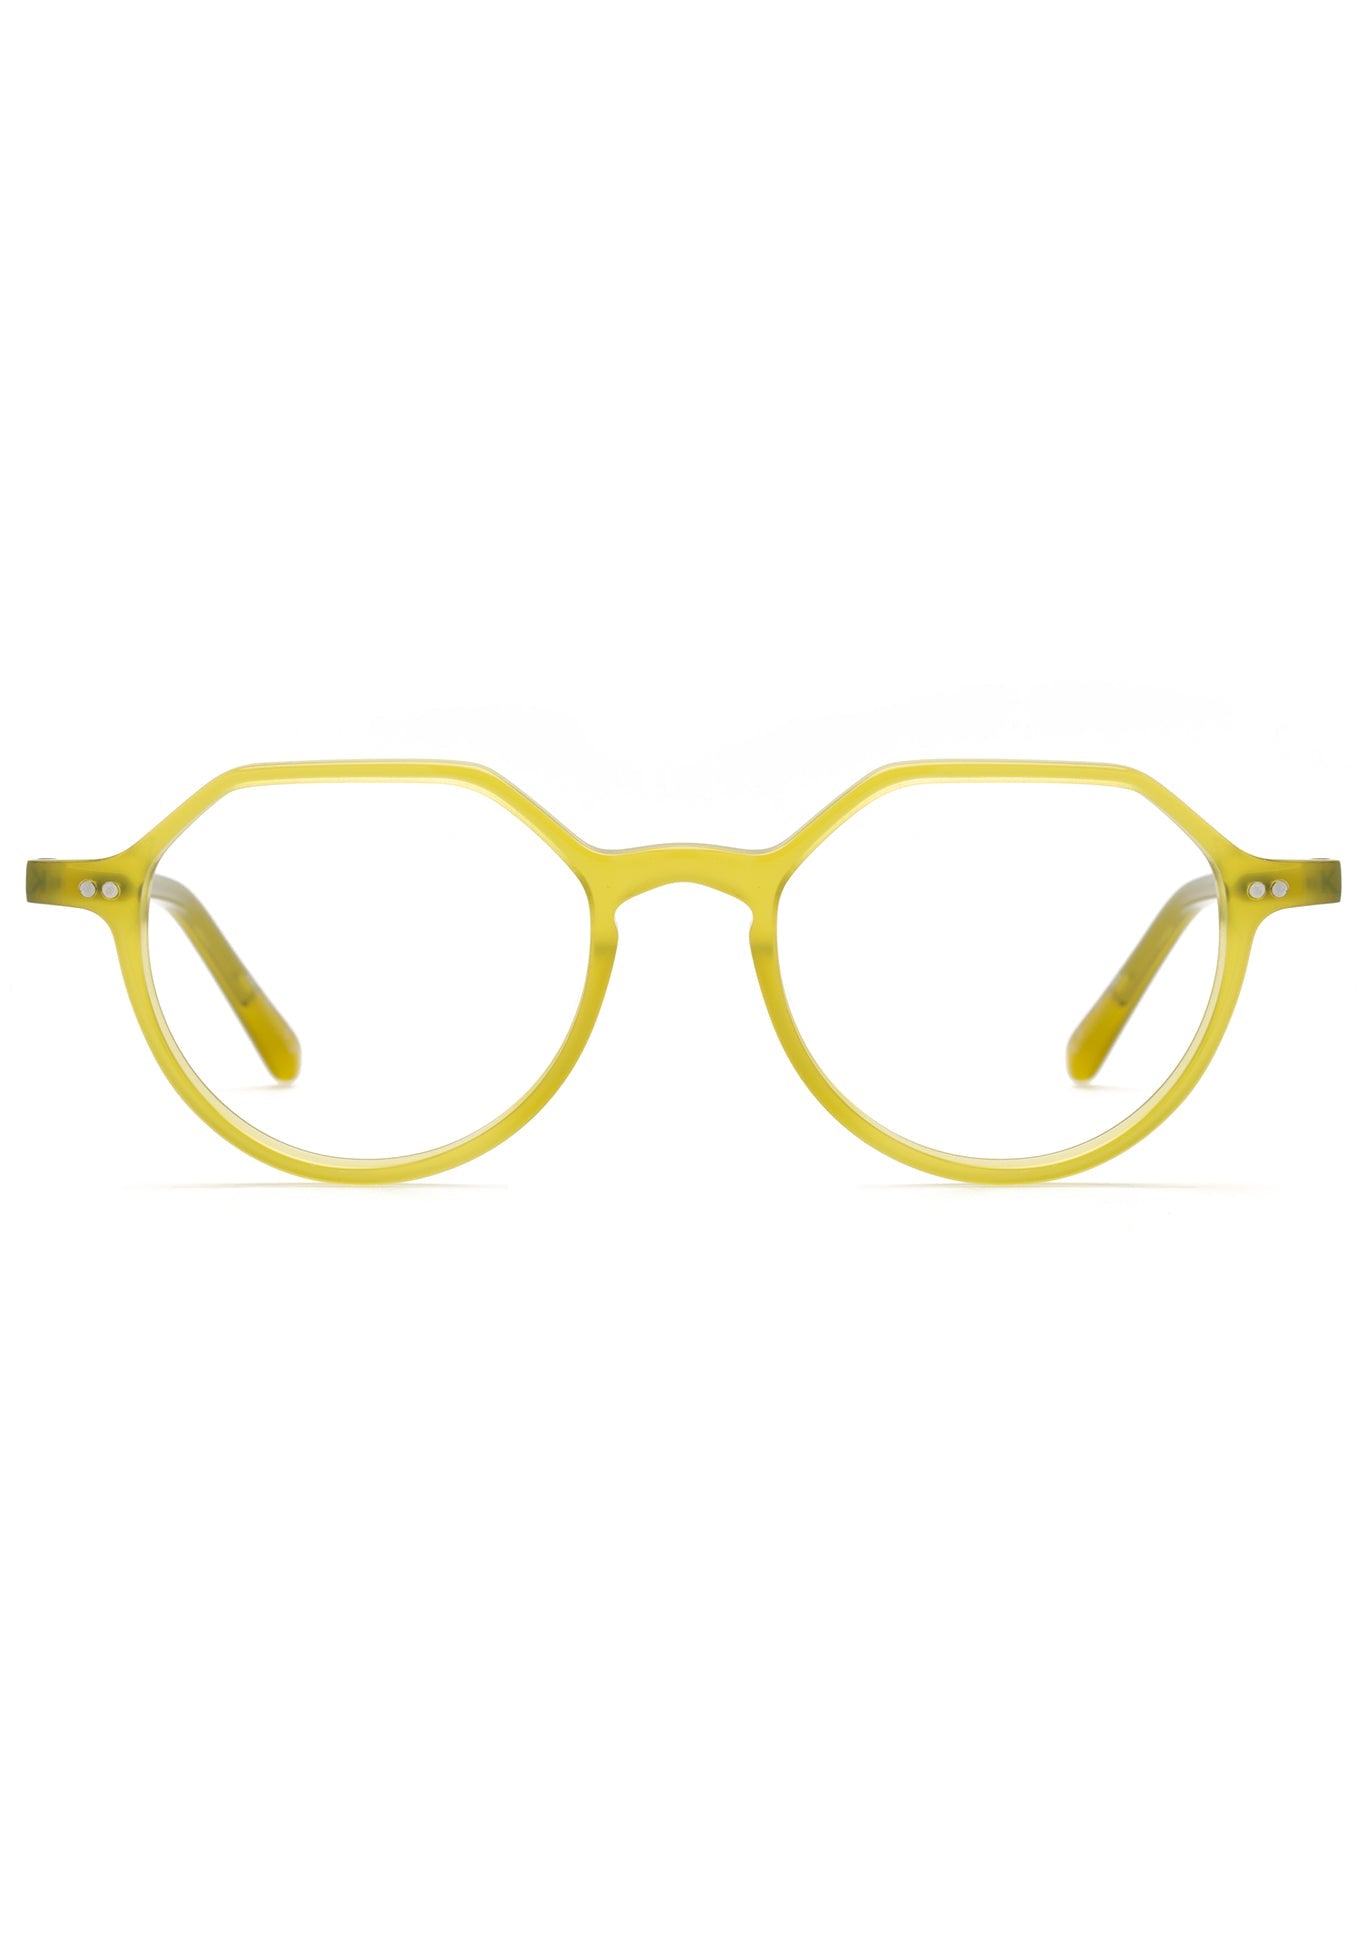 KREWE EYEGLASSES - JOEL | Chartreuse handcrafted, luxury yellow round glasses